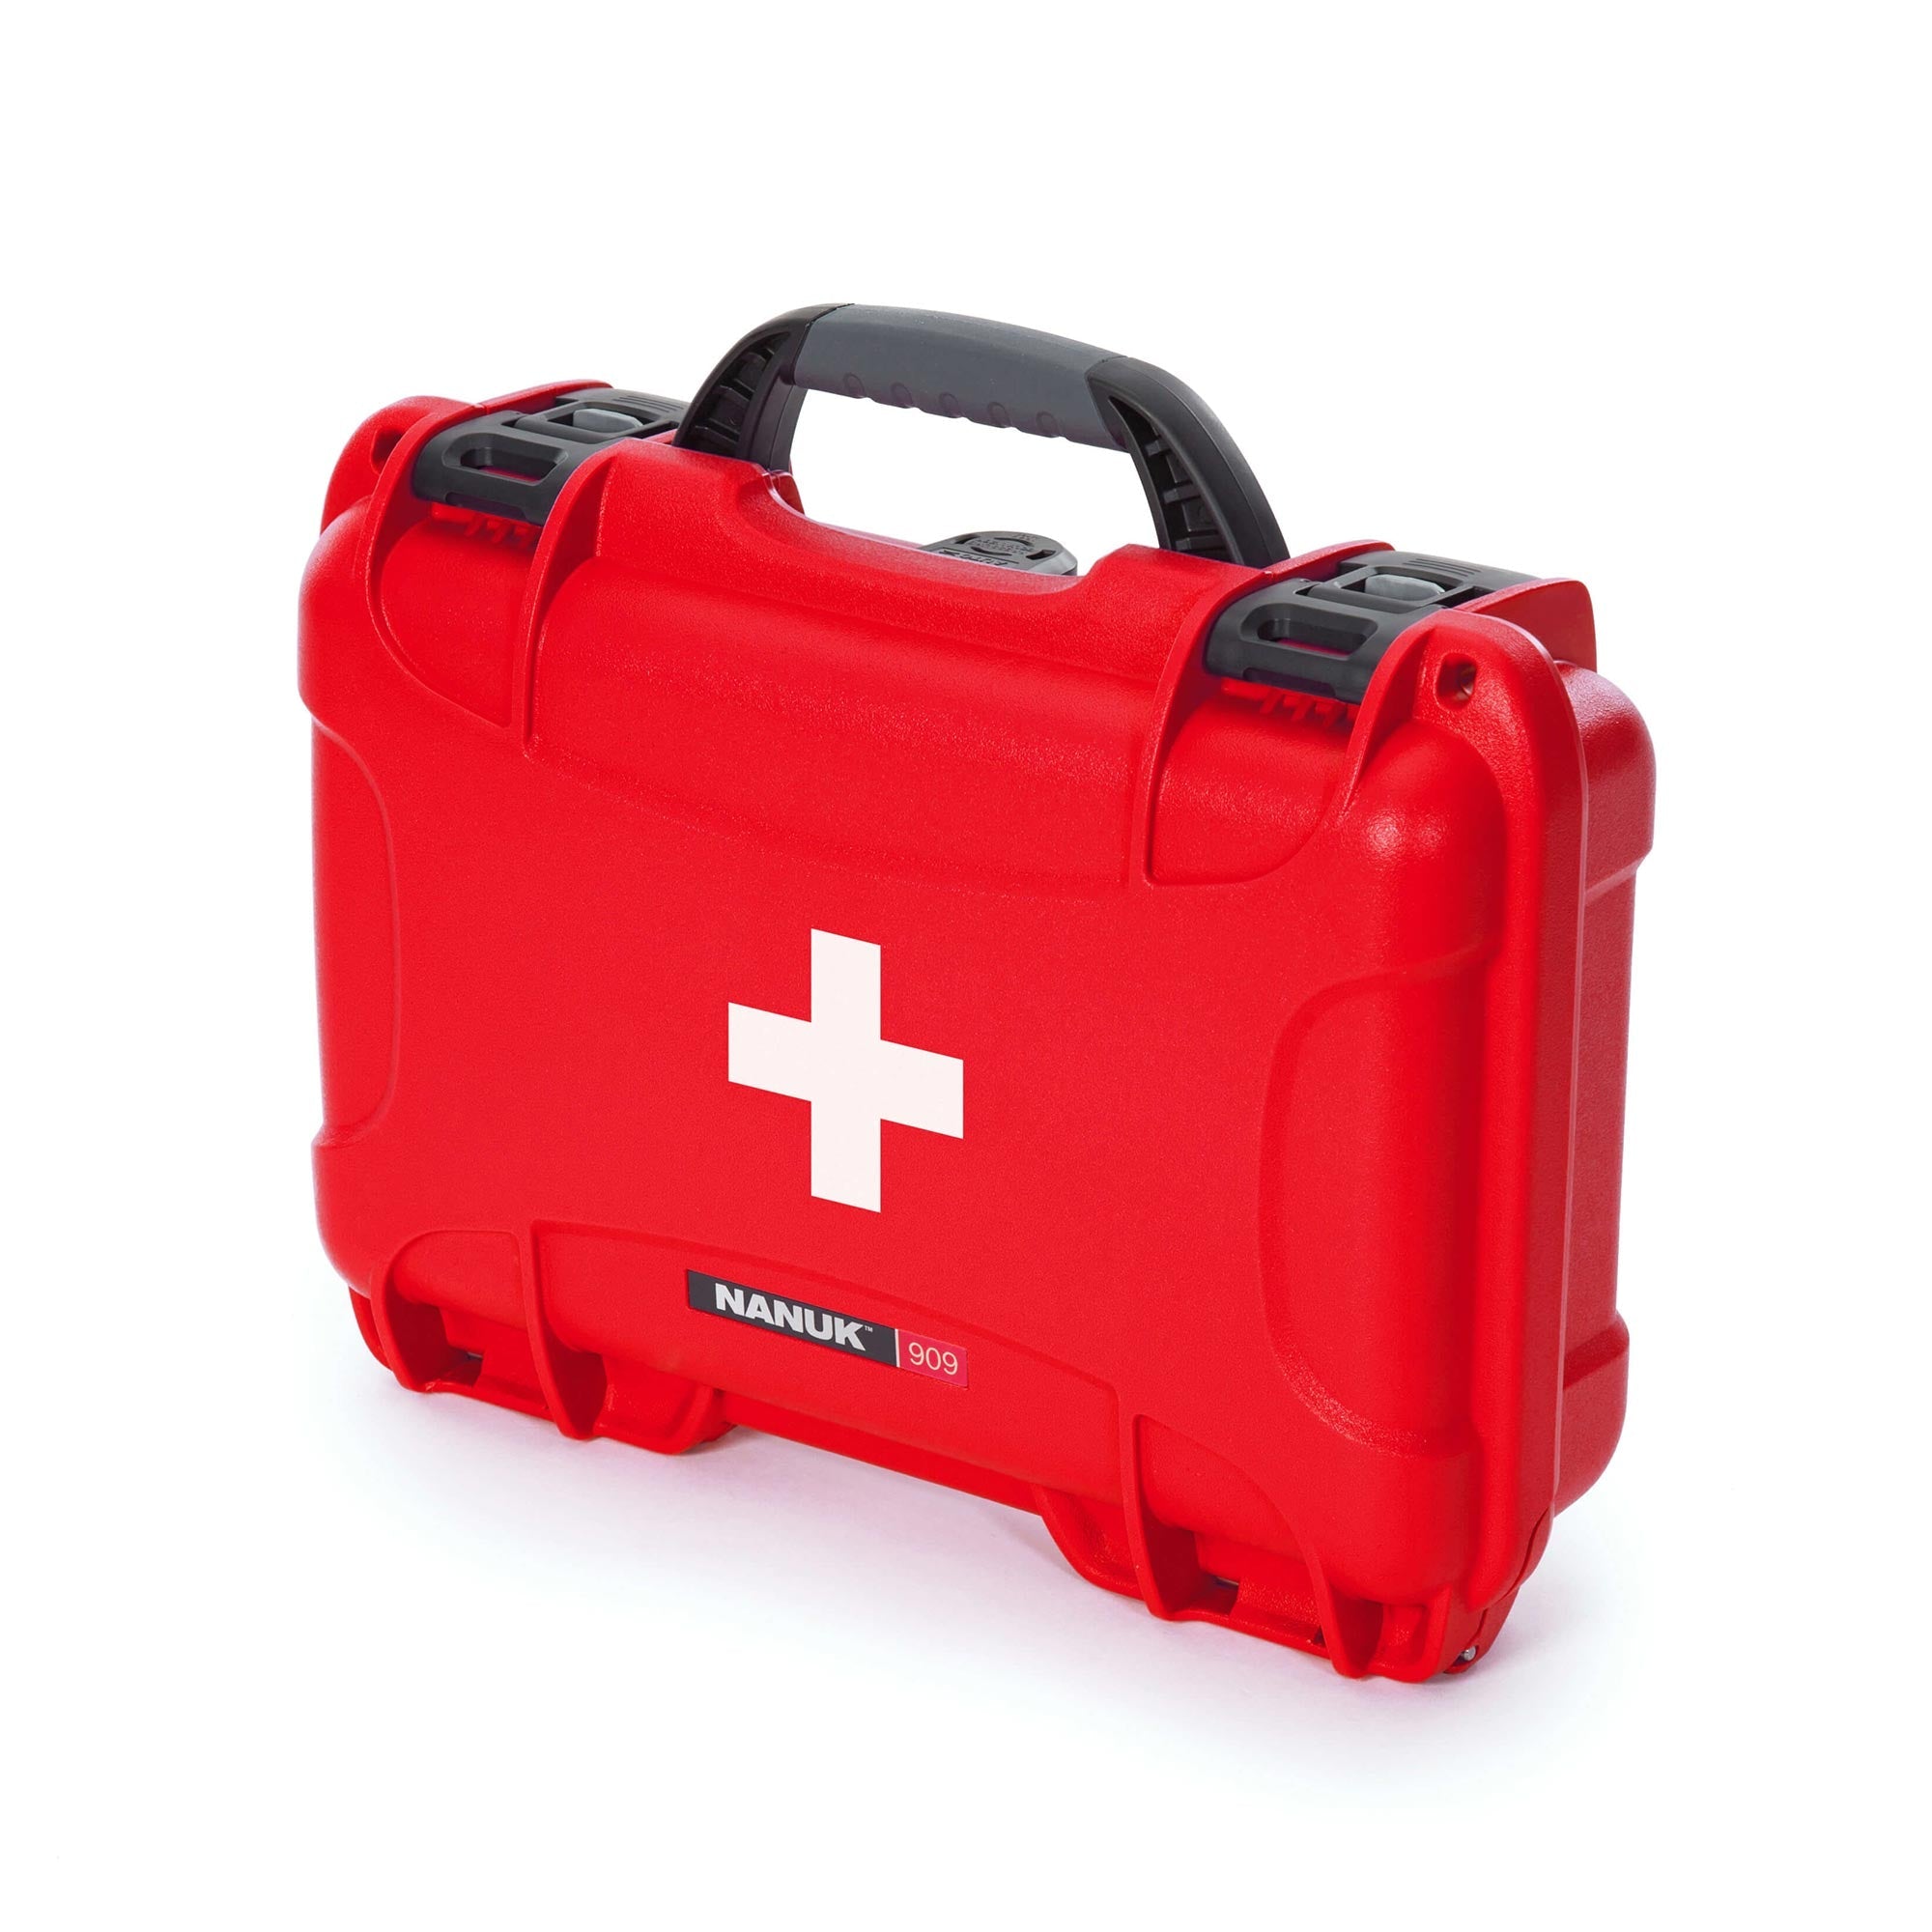 NANUK 909 First Aid valise-Outdoor Valise-Rouge-NANUK